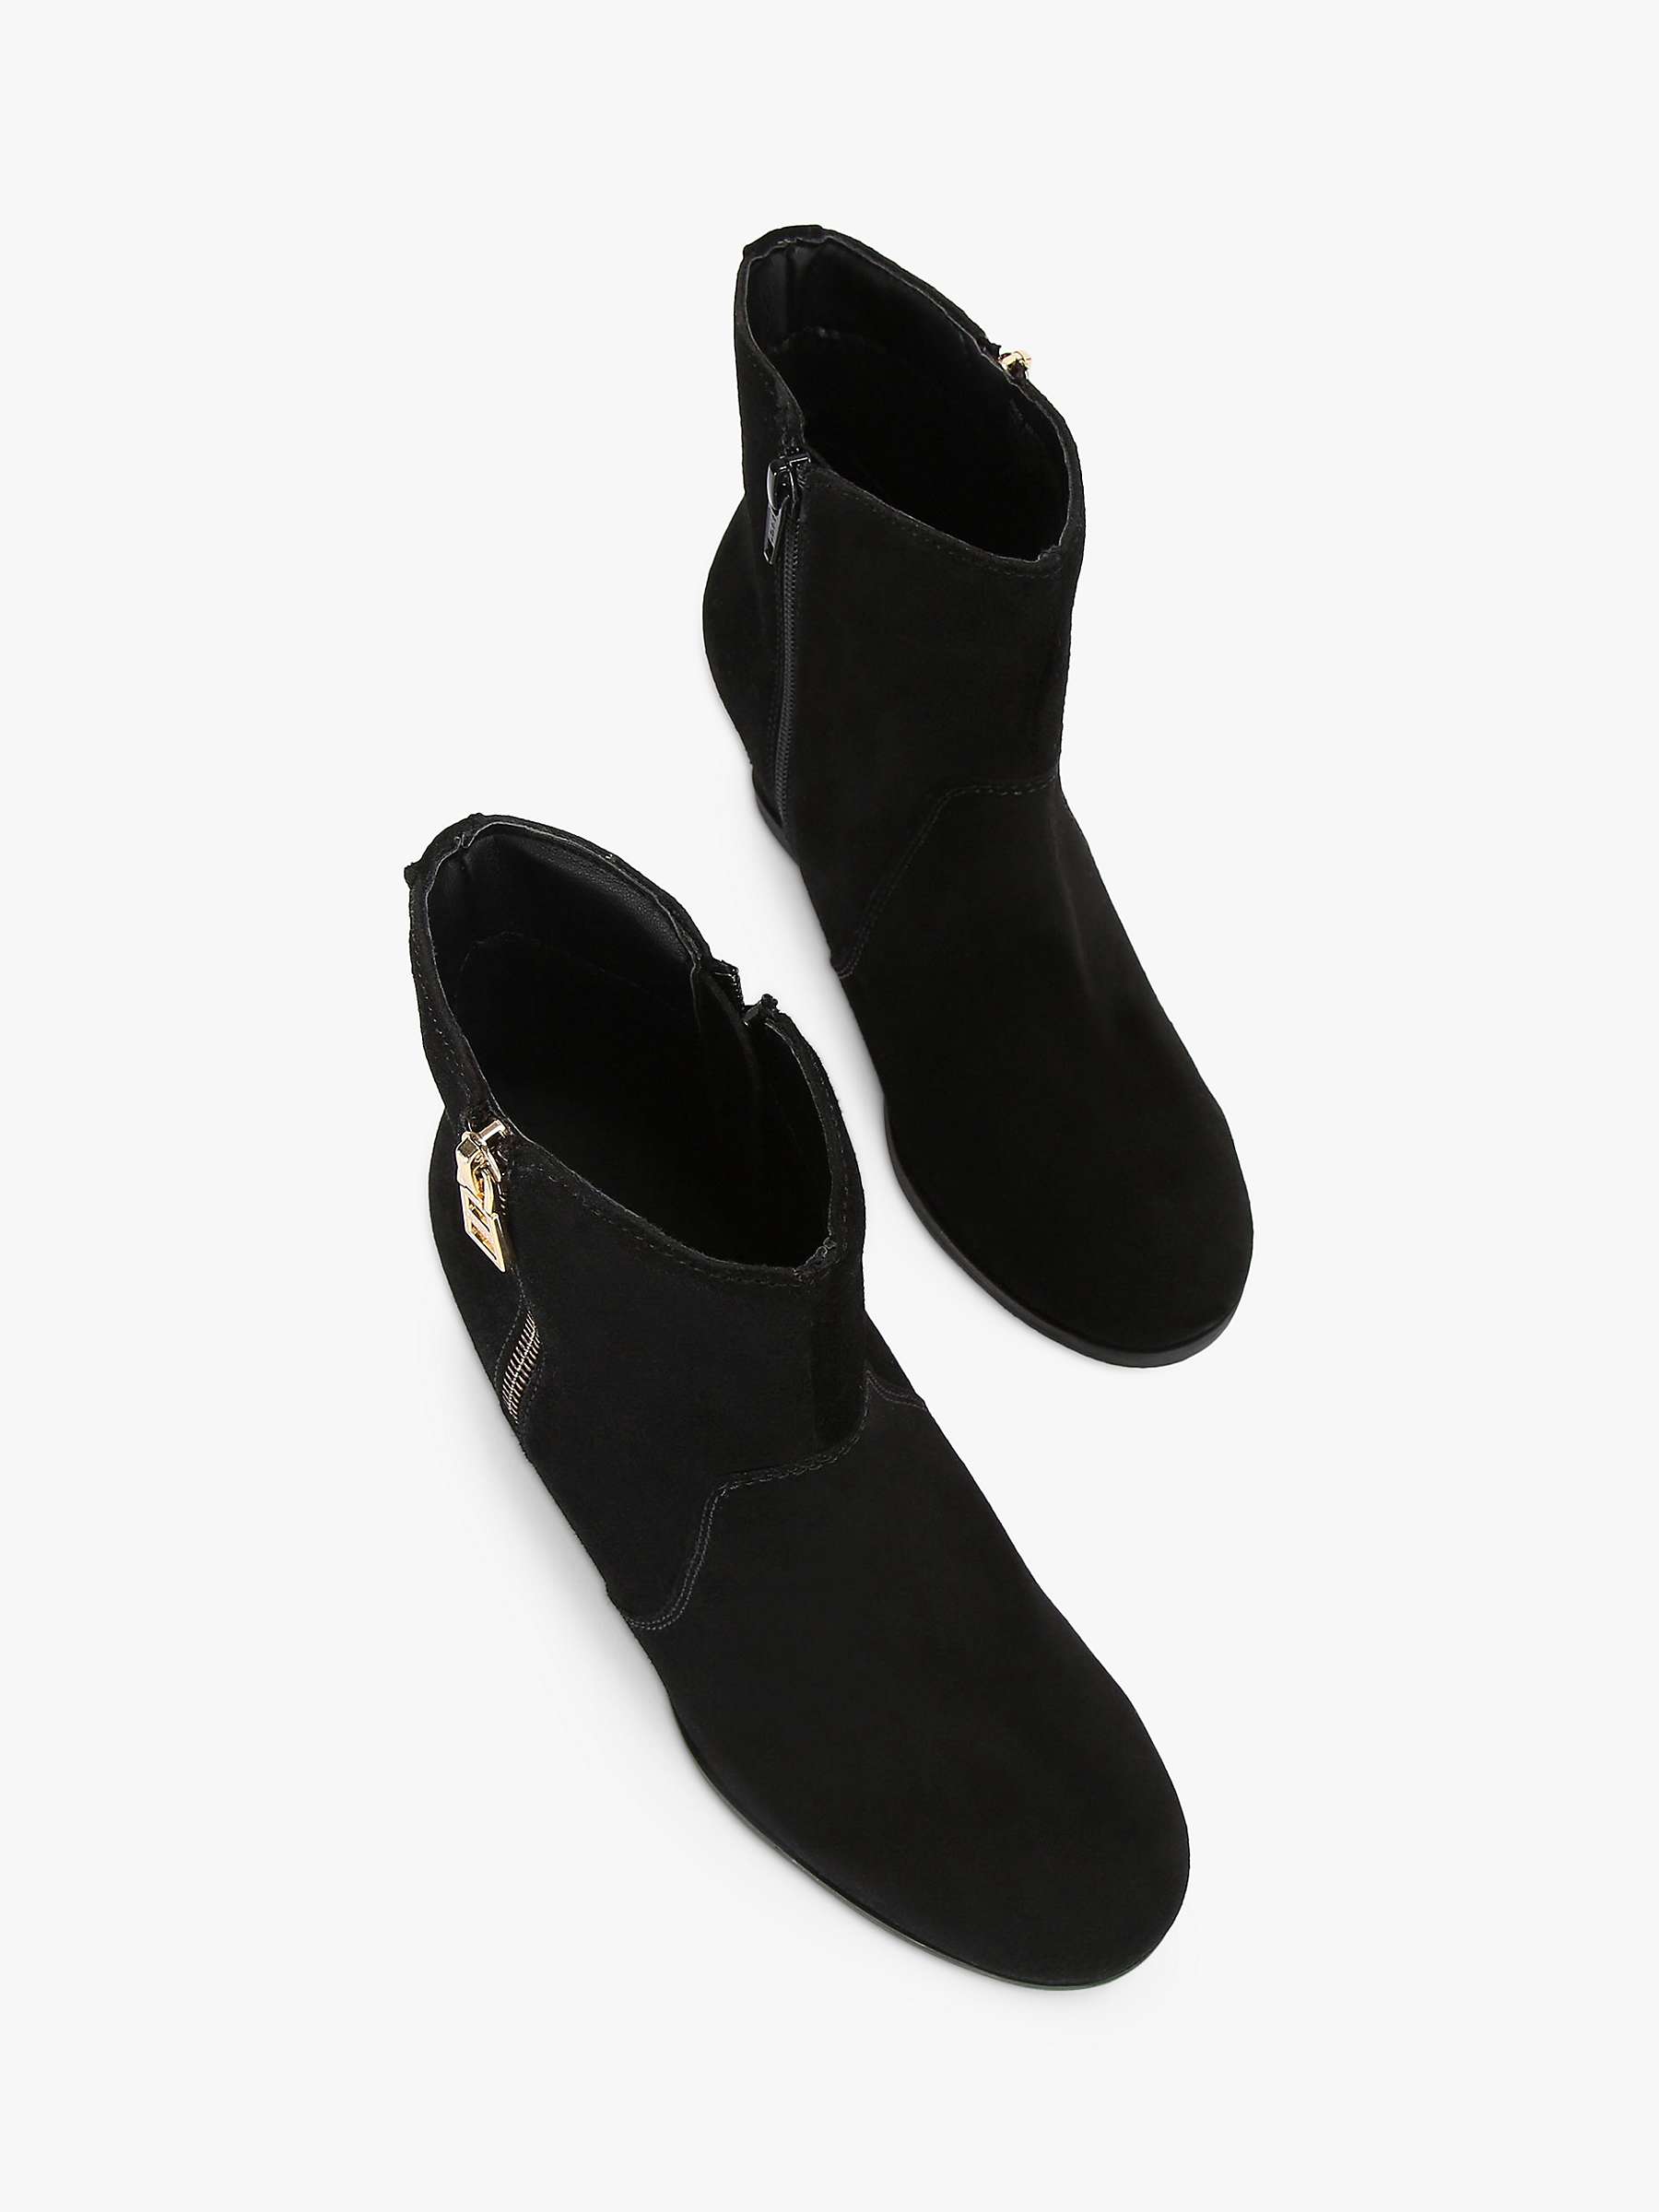 Buy Carvela Verity Suede Wedge Heel Boots, Black Online at johnlewis.com